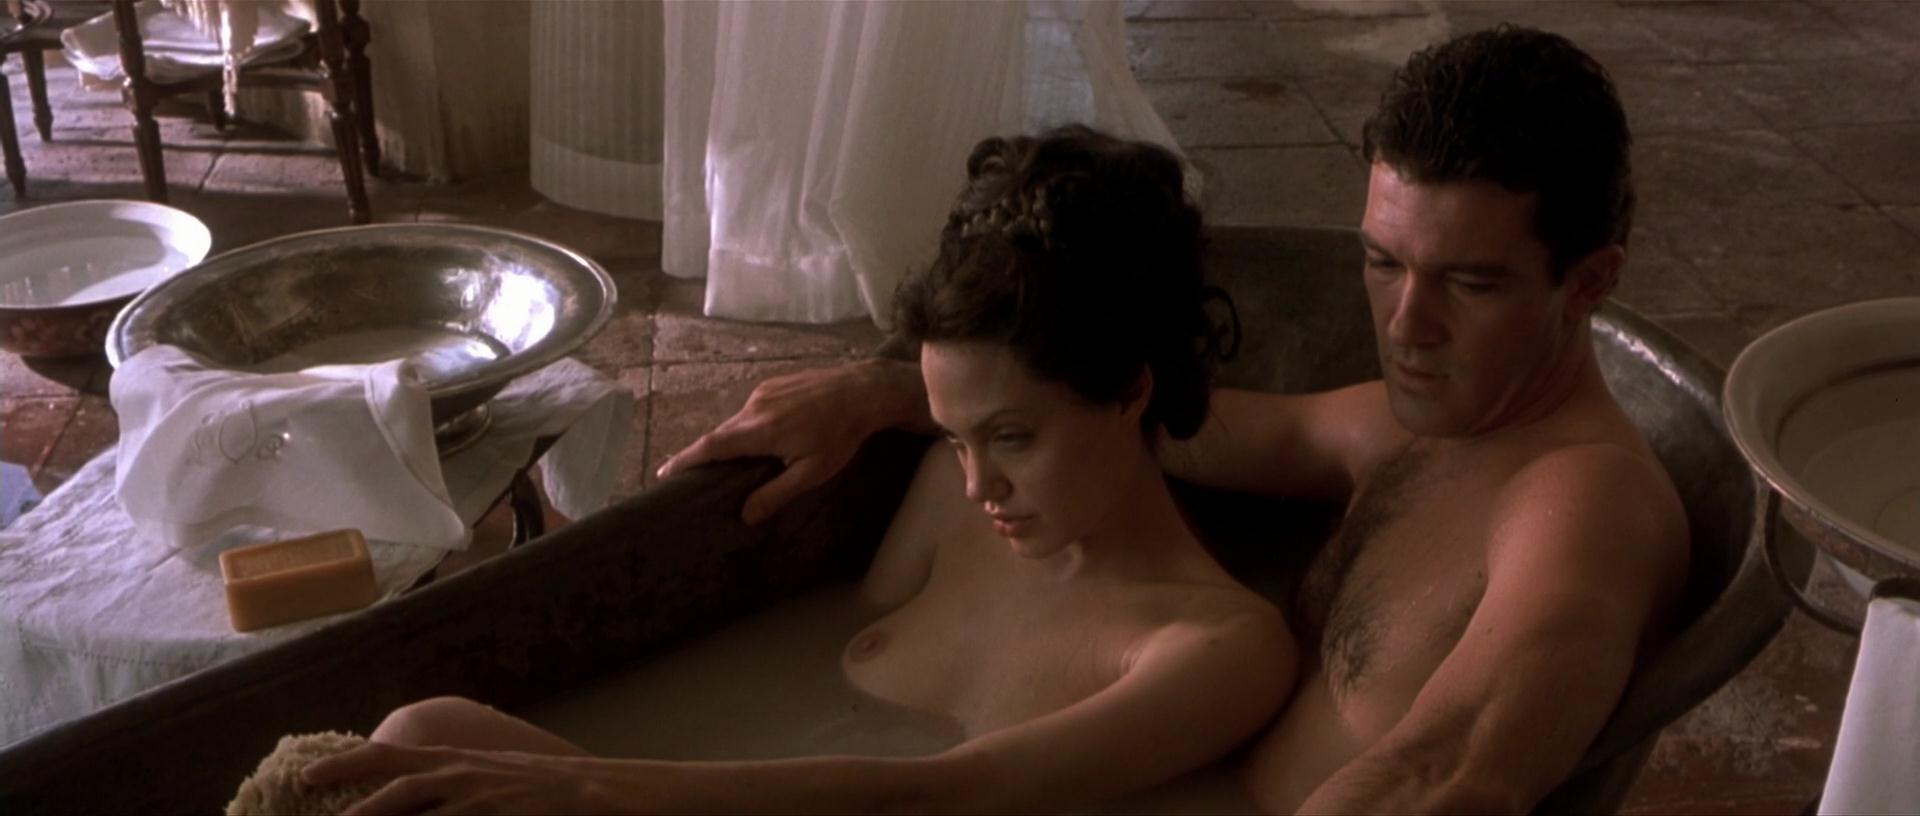 Angelina of jolie pics nude Angelina Jolie: